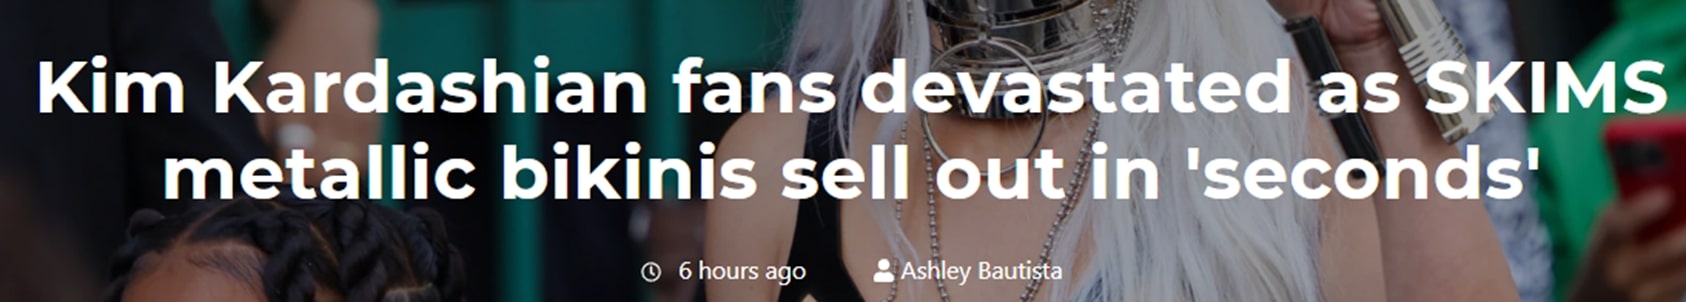 Headline: "Kim Kardashian fans devastated as SKIMS metallic bikinis sell out in seconds"